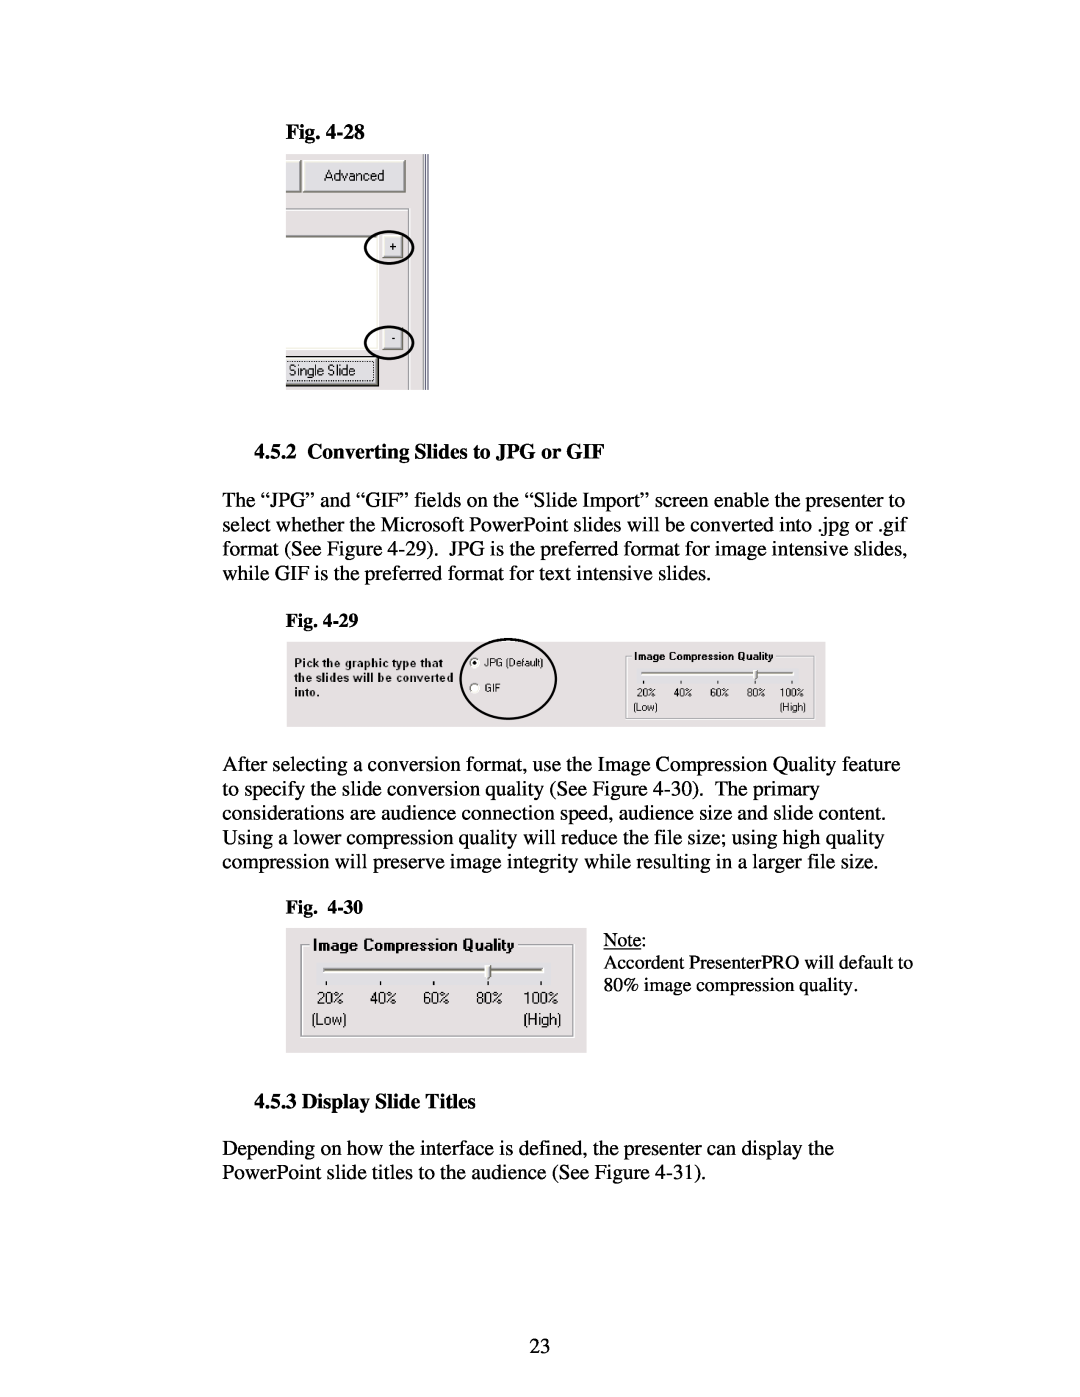 Polycom 6.1 user manual Converting Slides to JPG or GIF, Display Slide Titles 